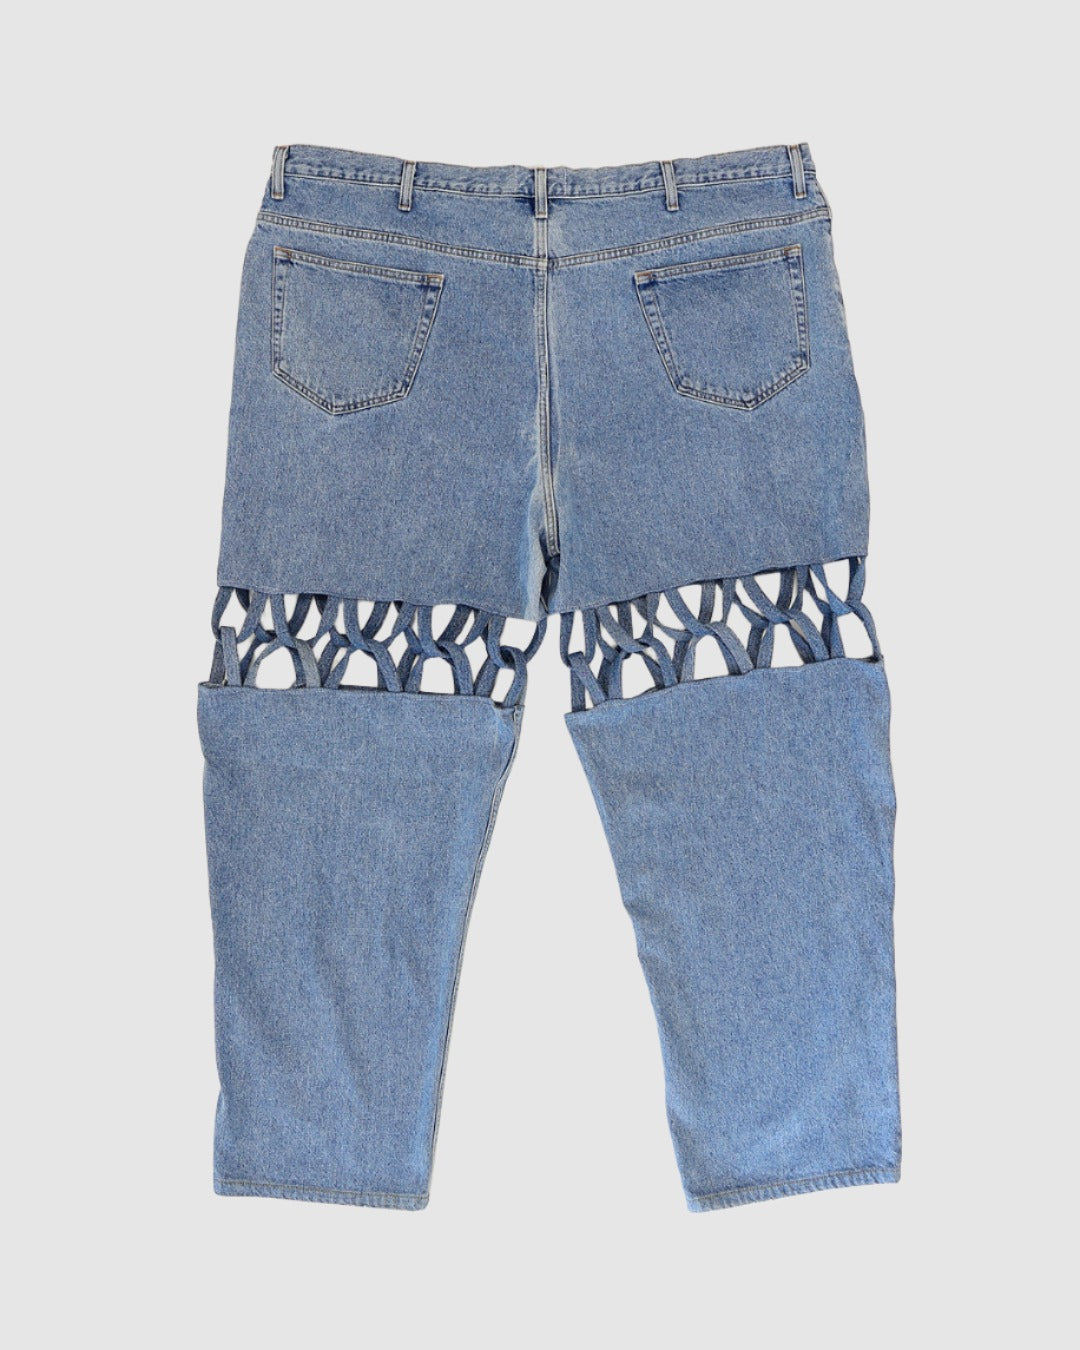 Criss Cross Jeans (size 28)